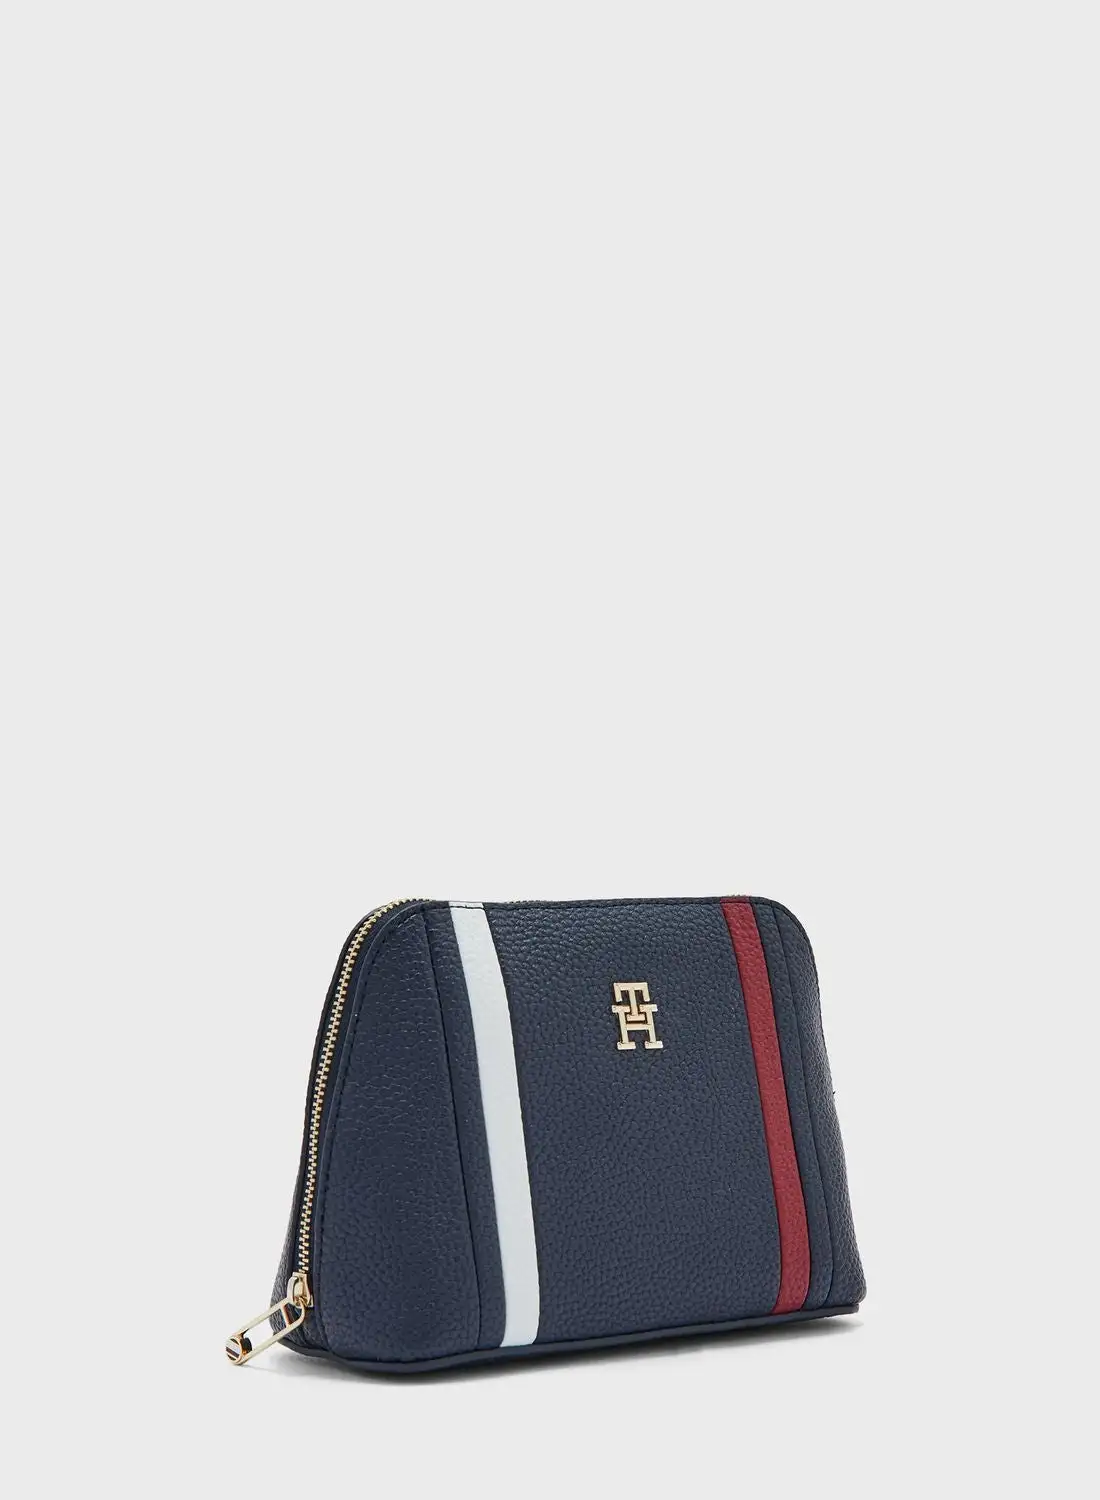 TOMMY HILFIGER Emblem Cosmetic Bag